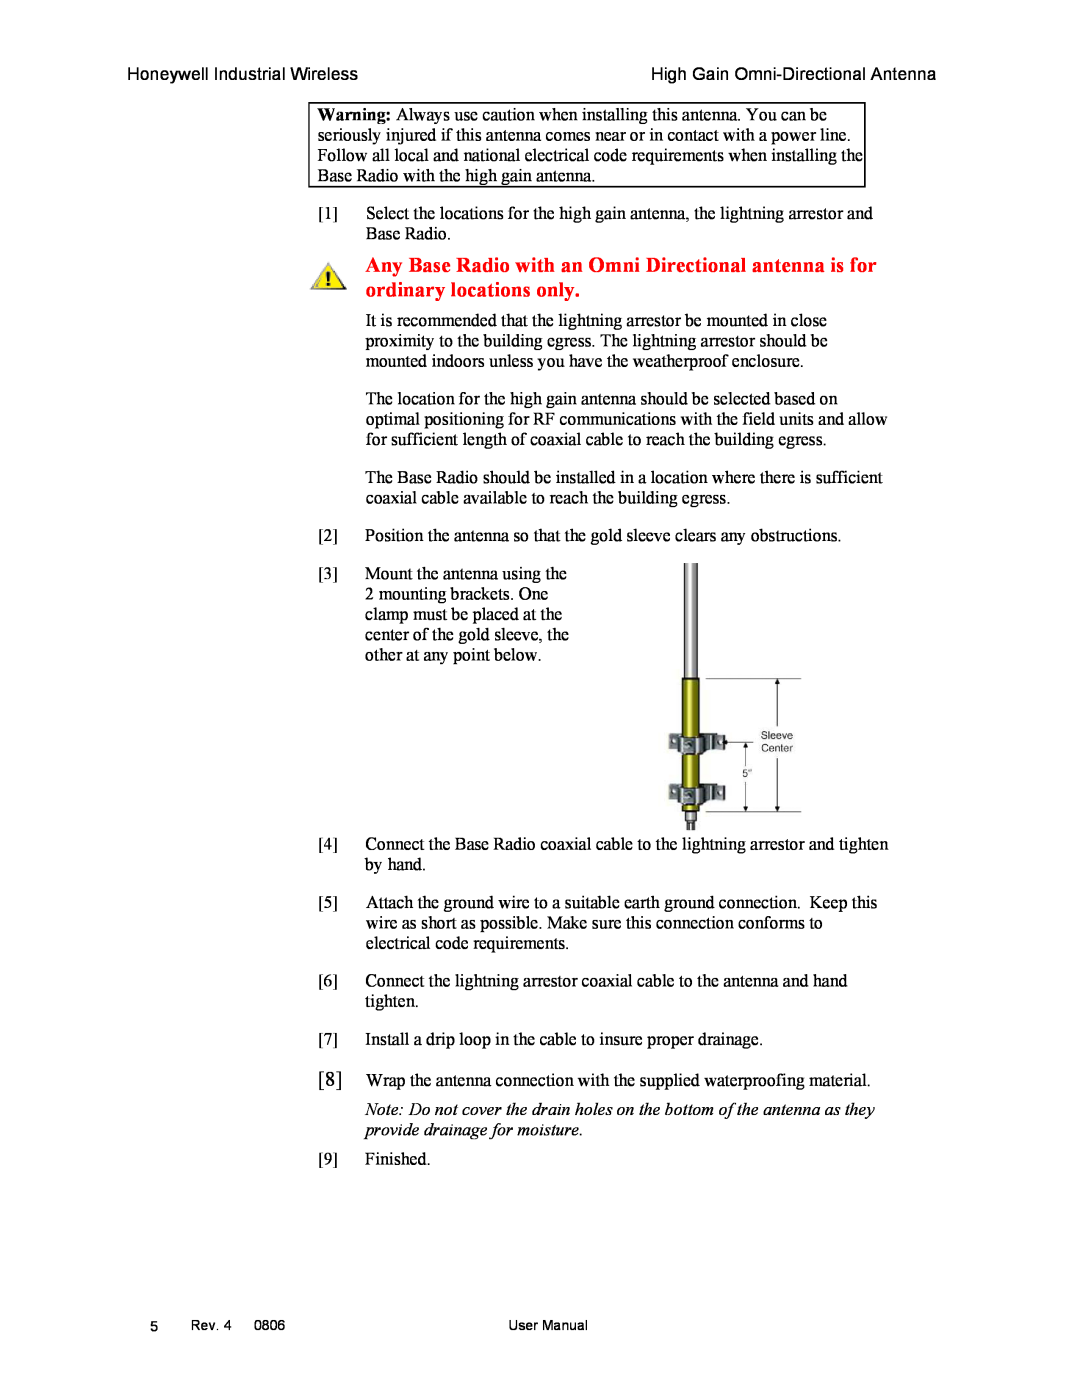 Honeywell High Gain Omni Directional Antenna manual 9Finished 